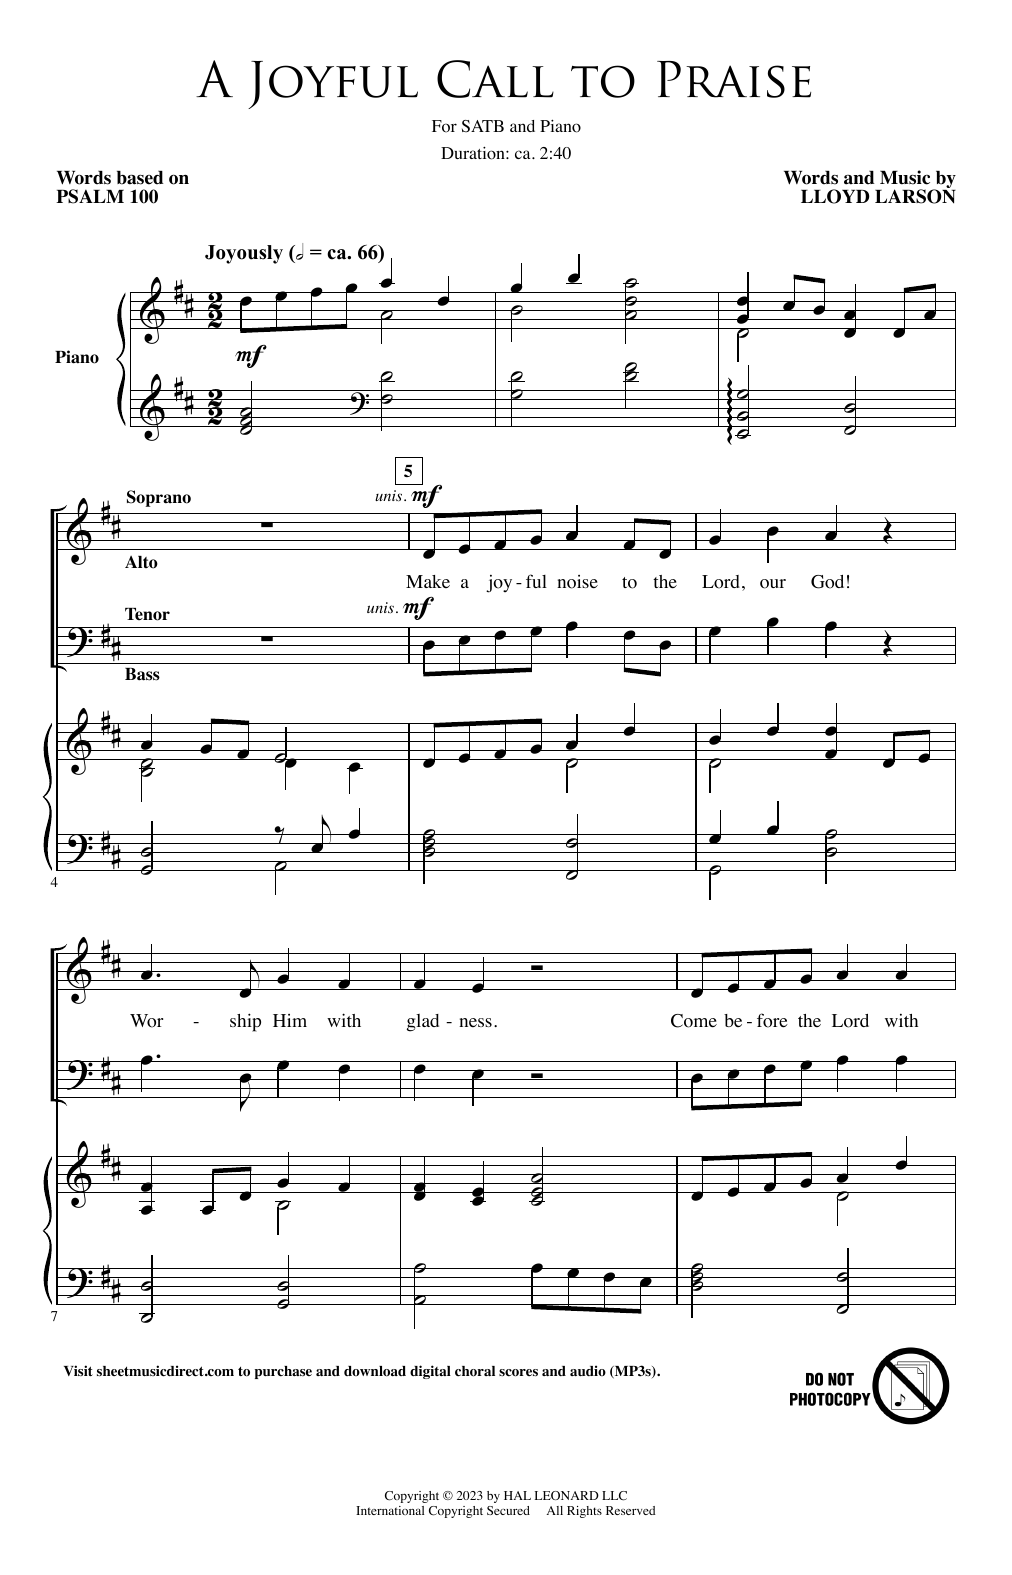 Lloyd Larson A Joyful Call To Praise Sheet Music Notes & Chords for SATB Choir - Download or Print PDF